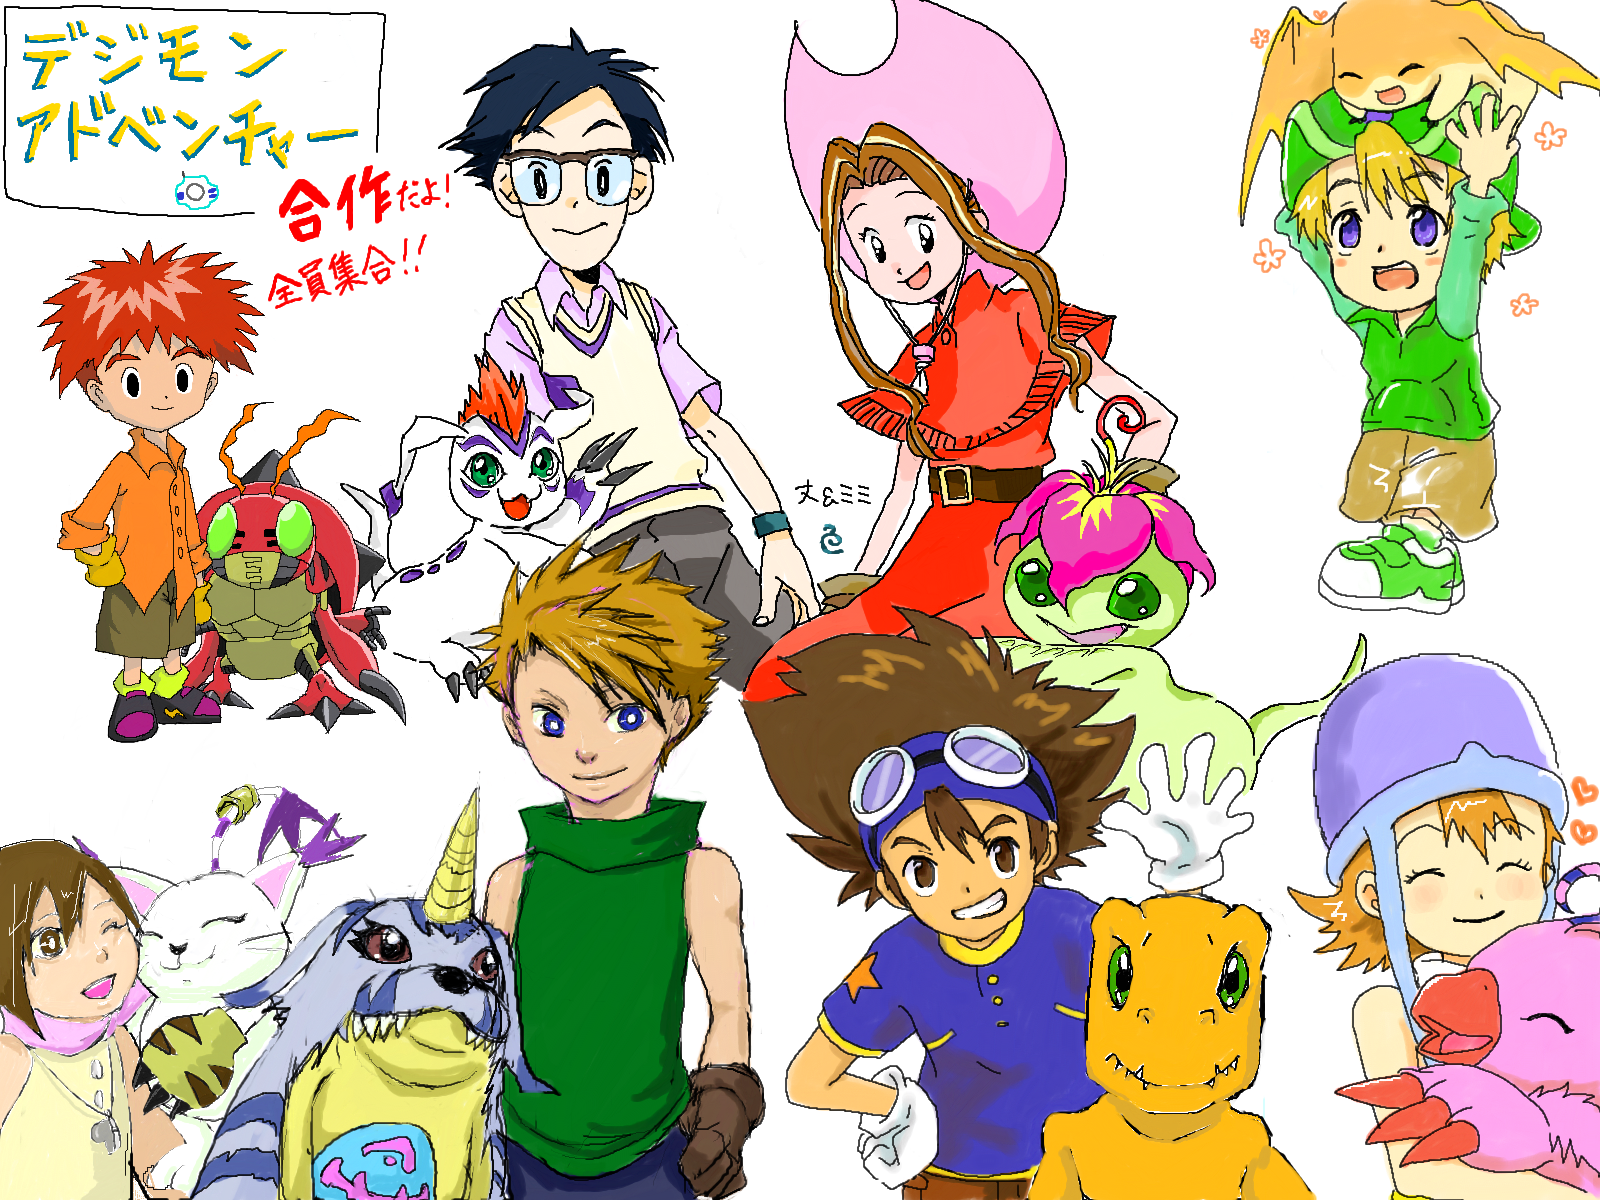 Digimon Adventure Characters List w/ Photos